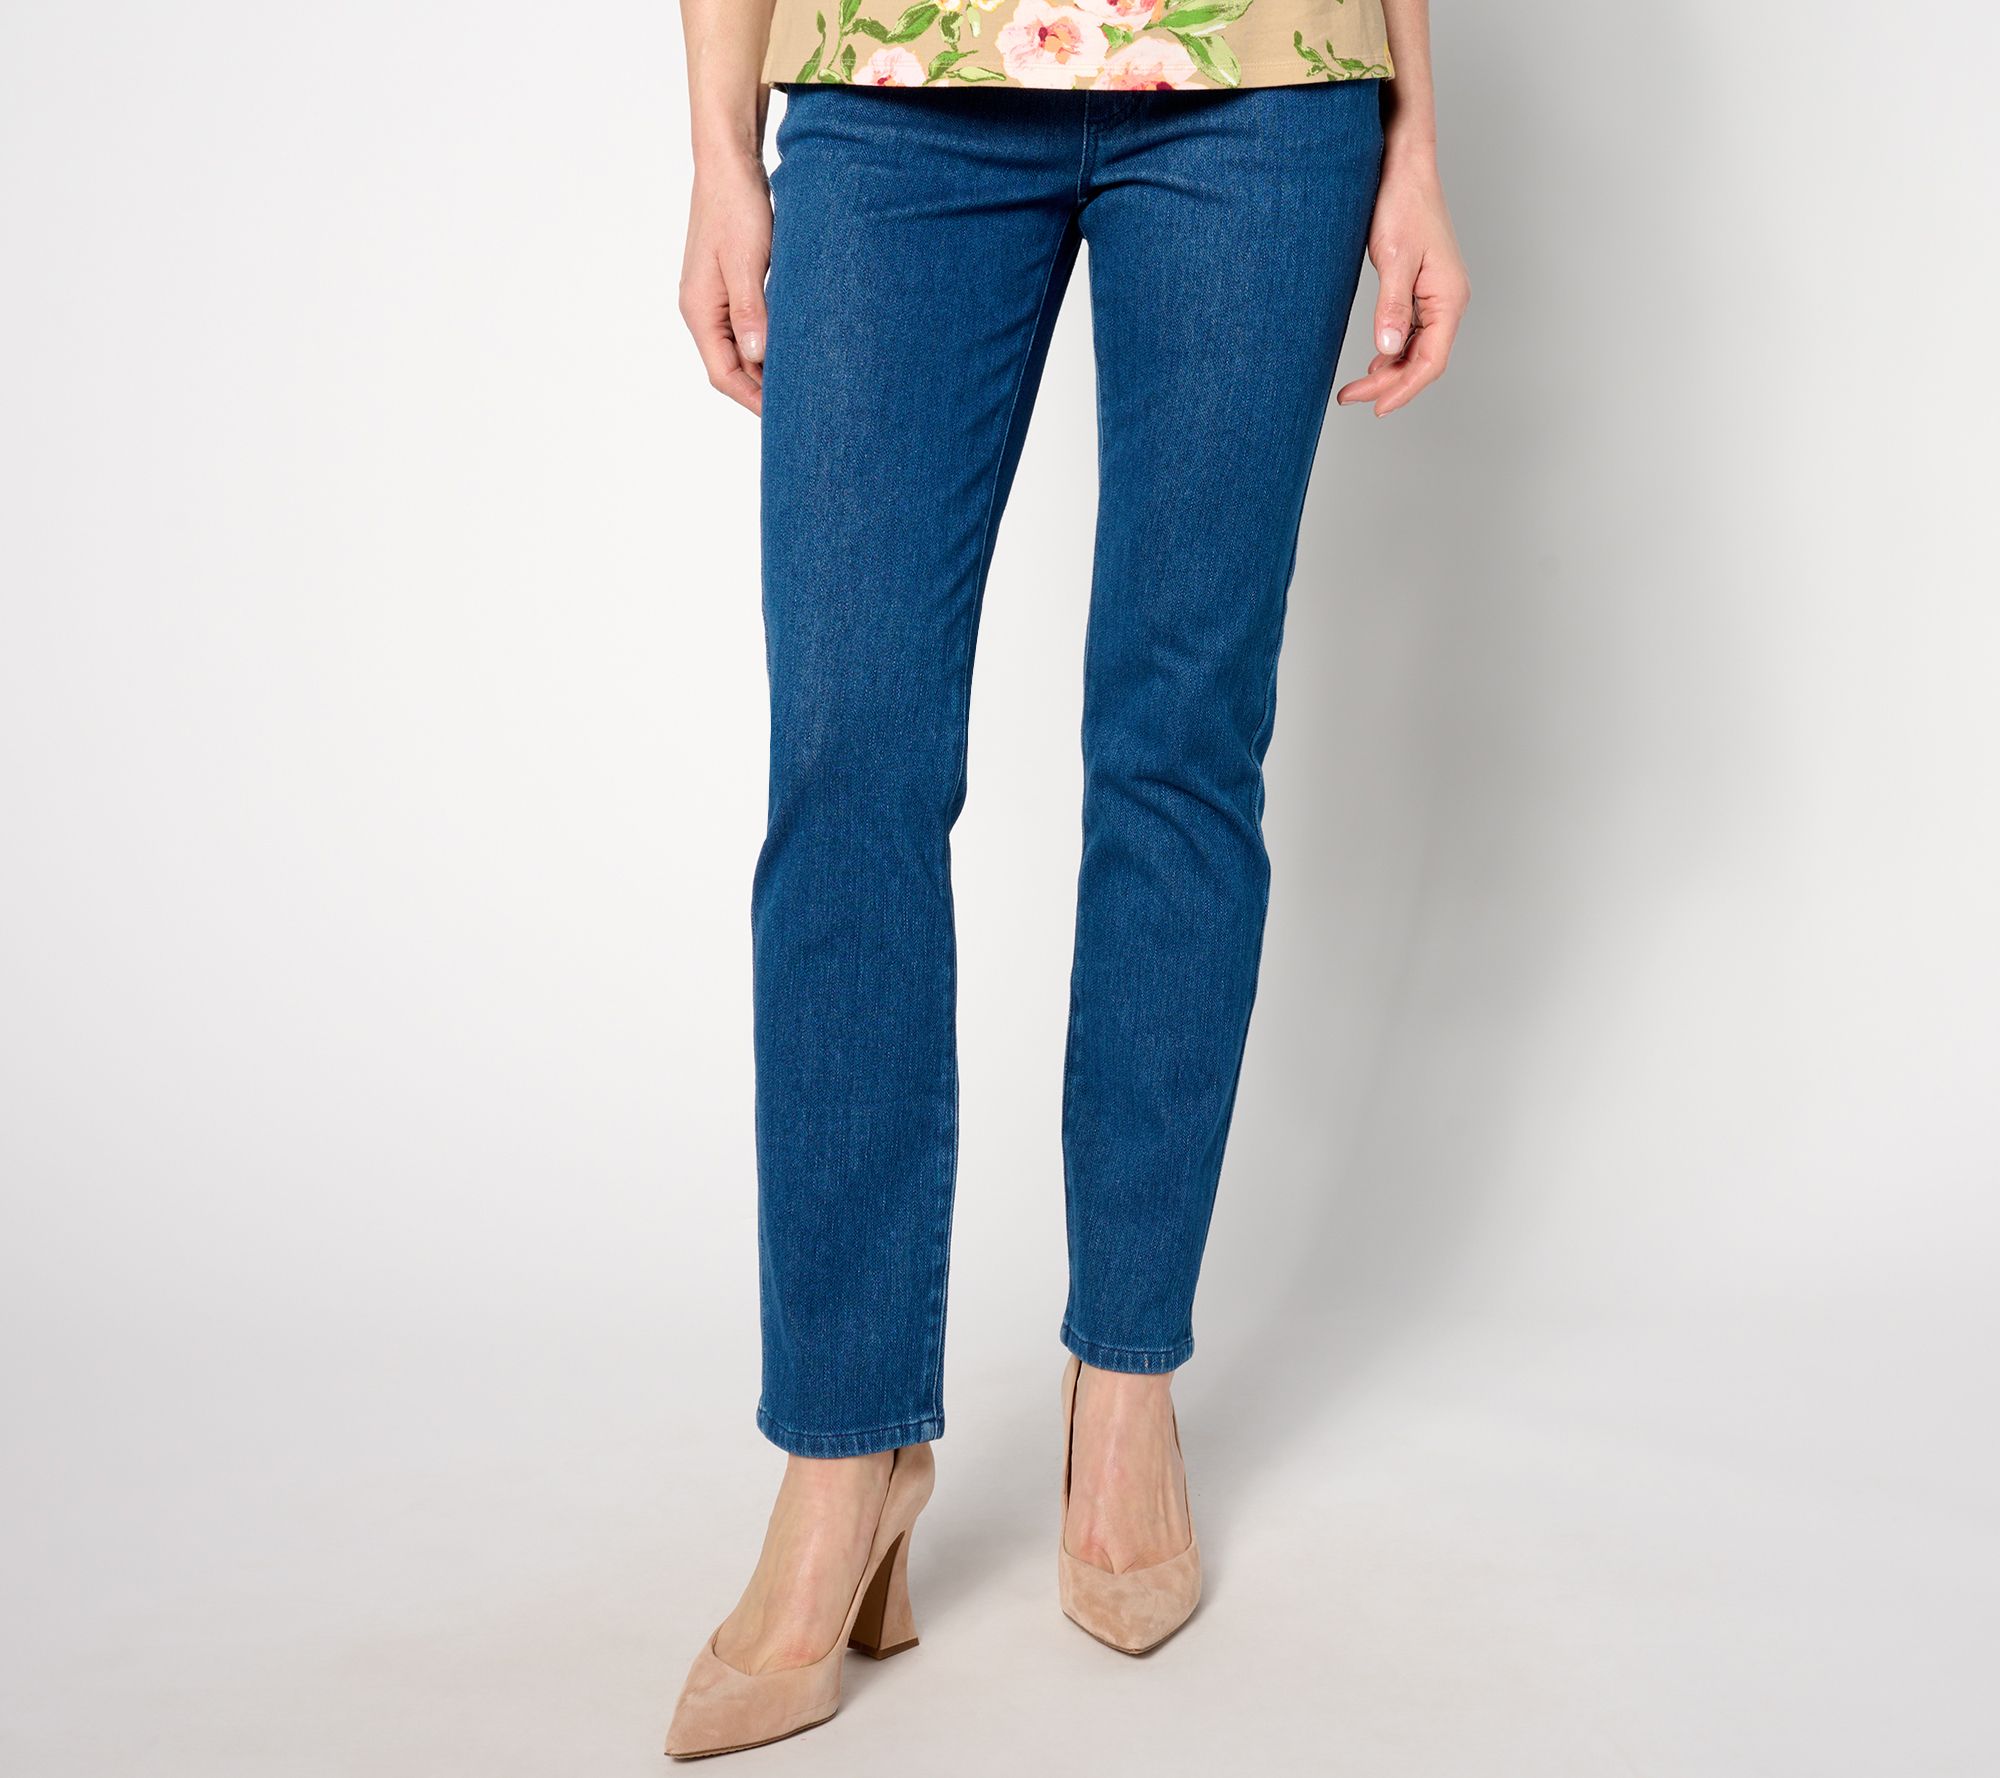 Petite Plus 2X (22W-24W) - Jeans - Full-Length Pants 